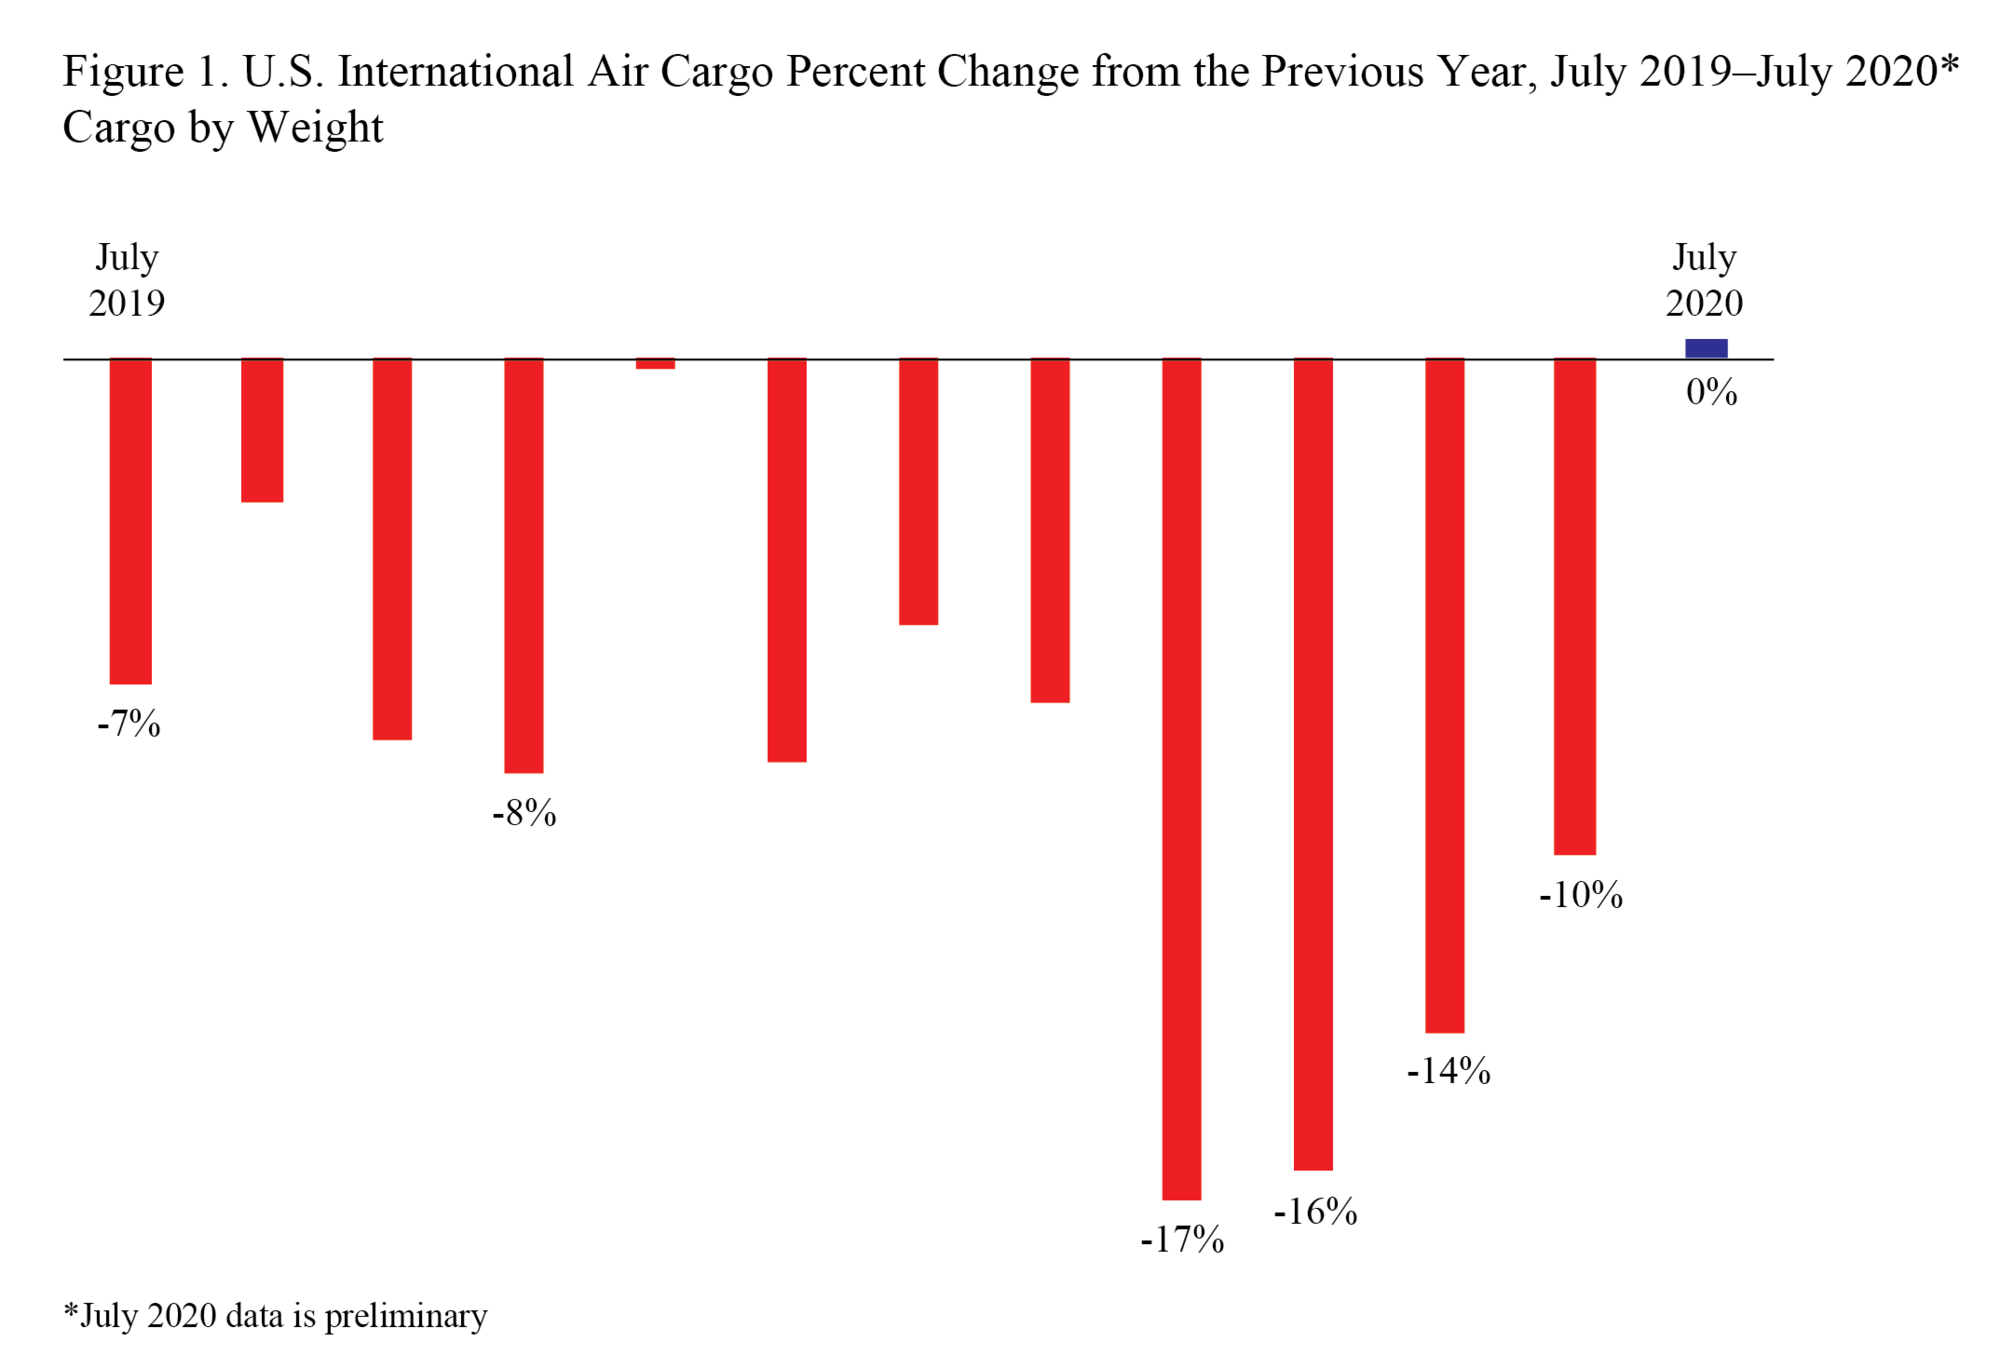 U.S. International Air Cargo, July 2020 (Preliminary)